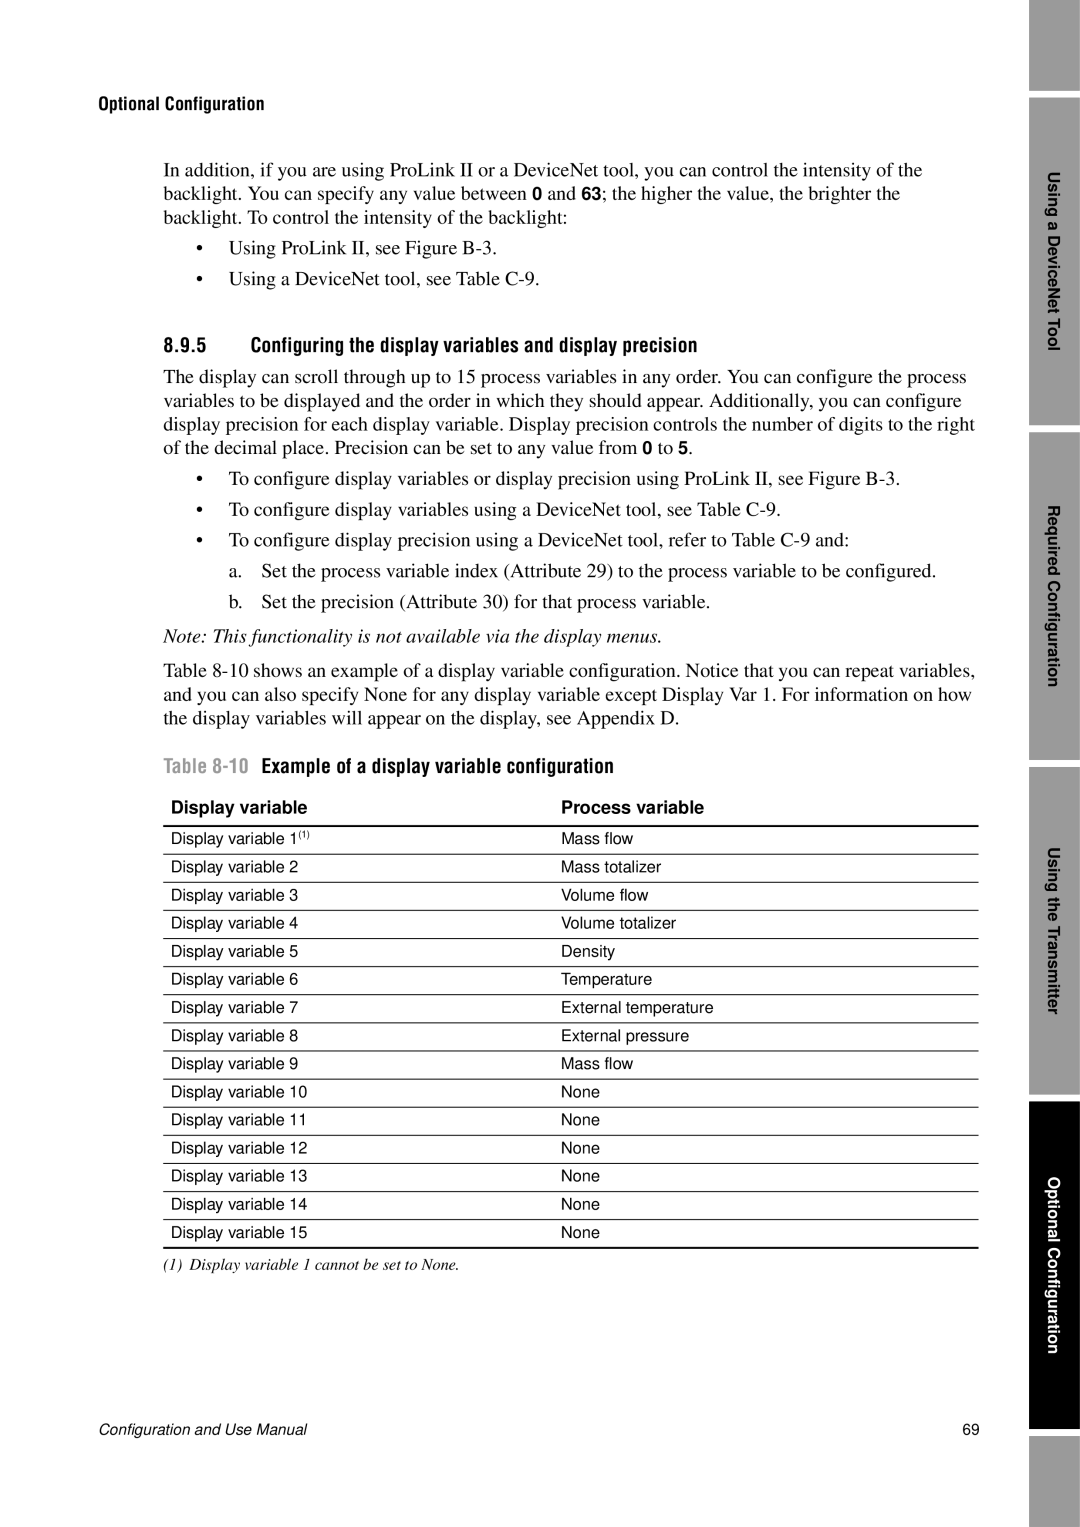 Emerson Process Management 2400S manual •Using ProLink II, see Figure B-3 